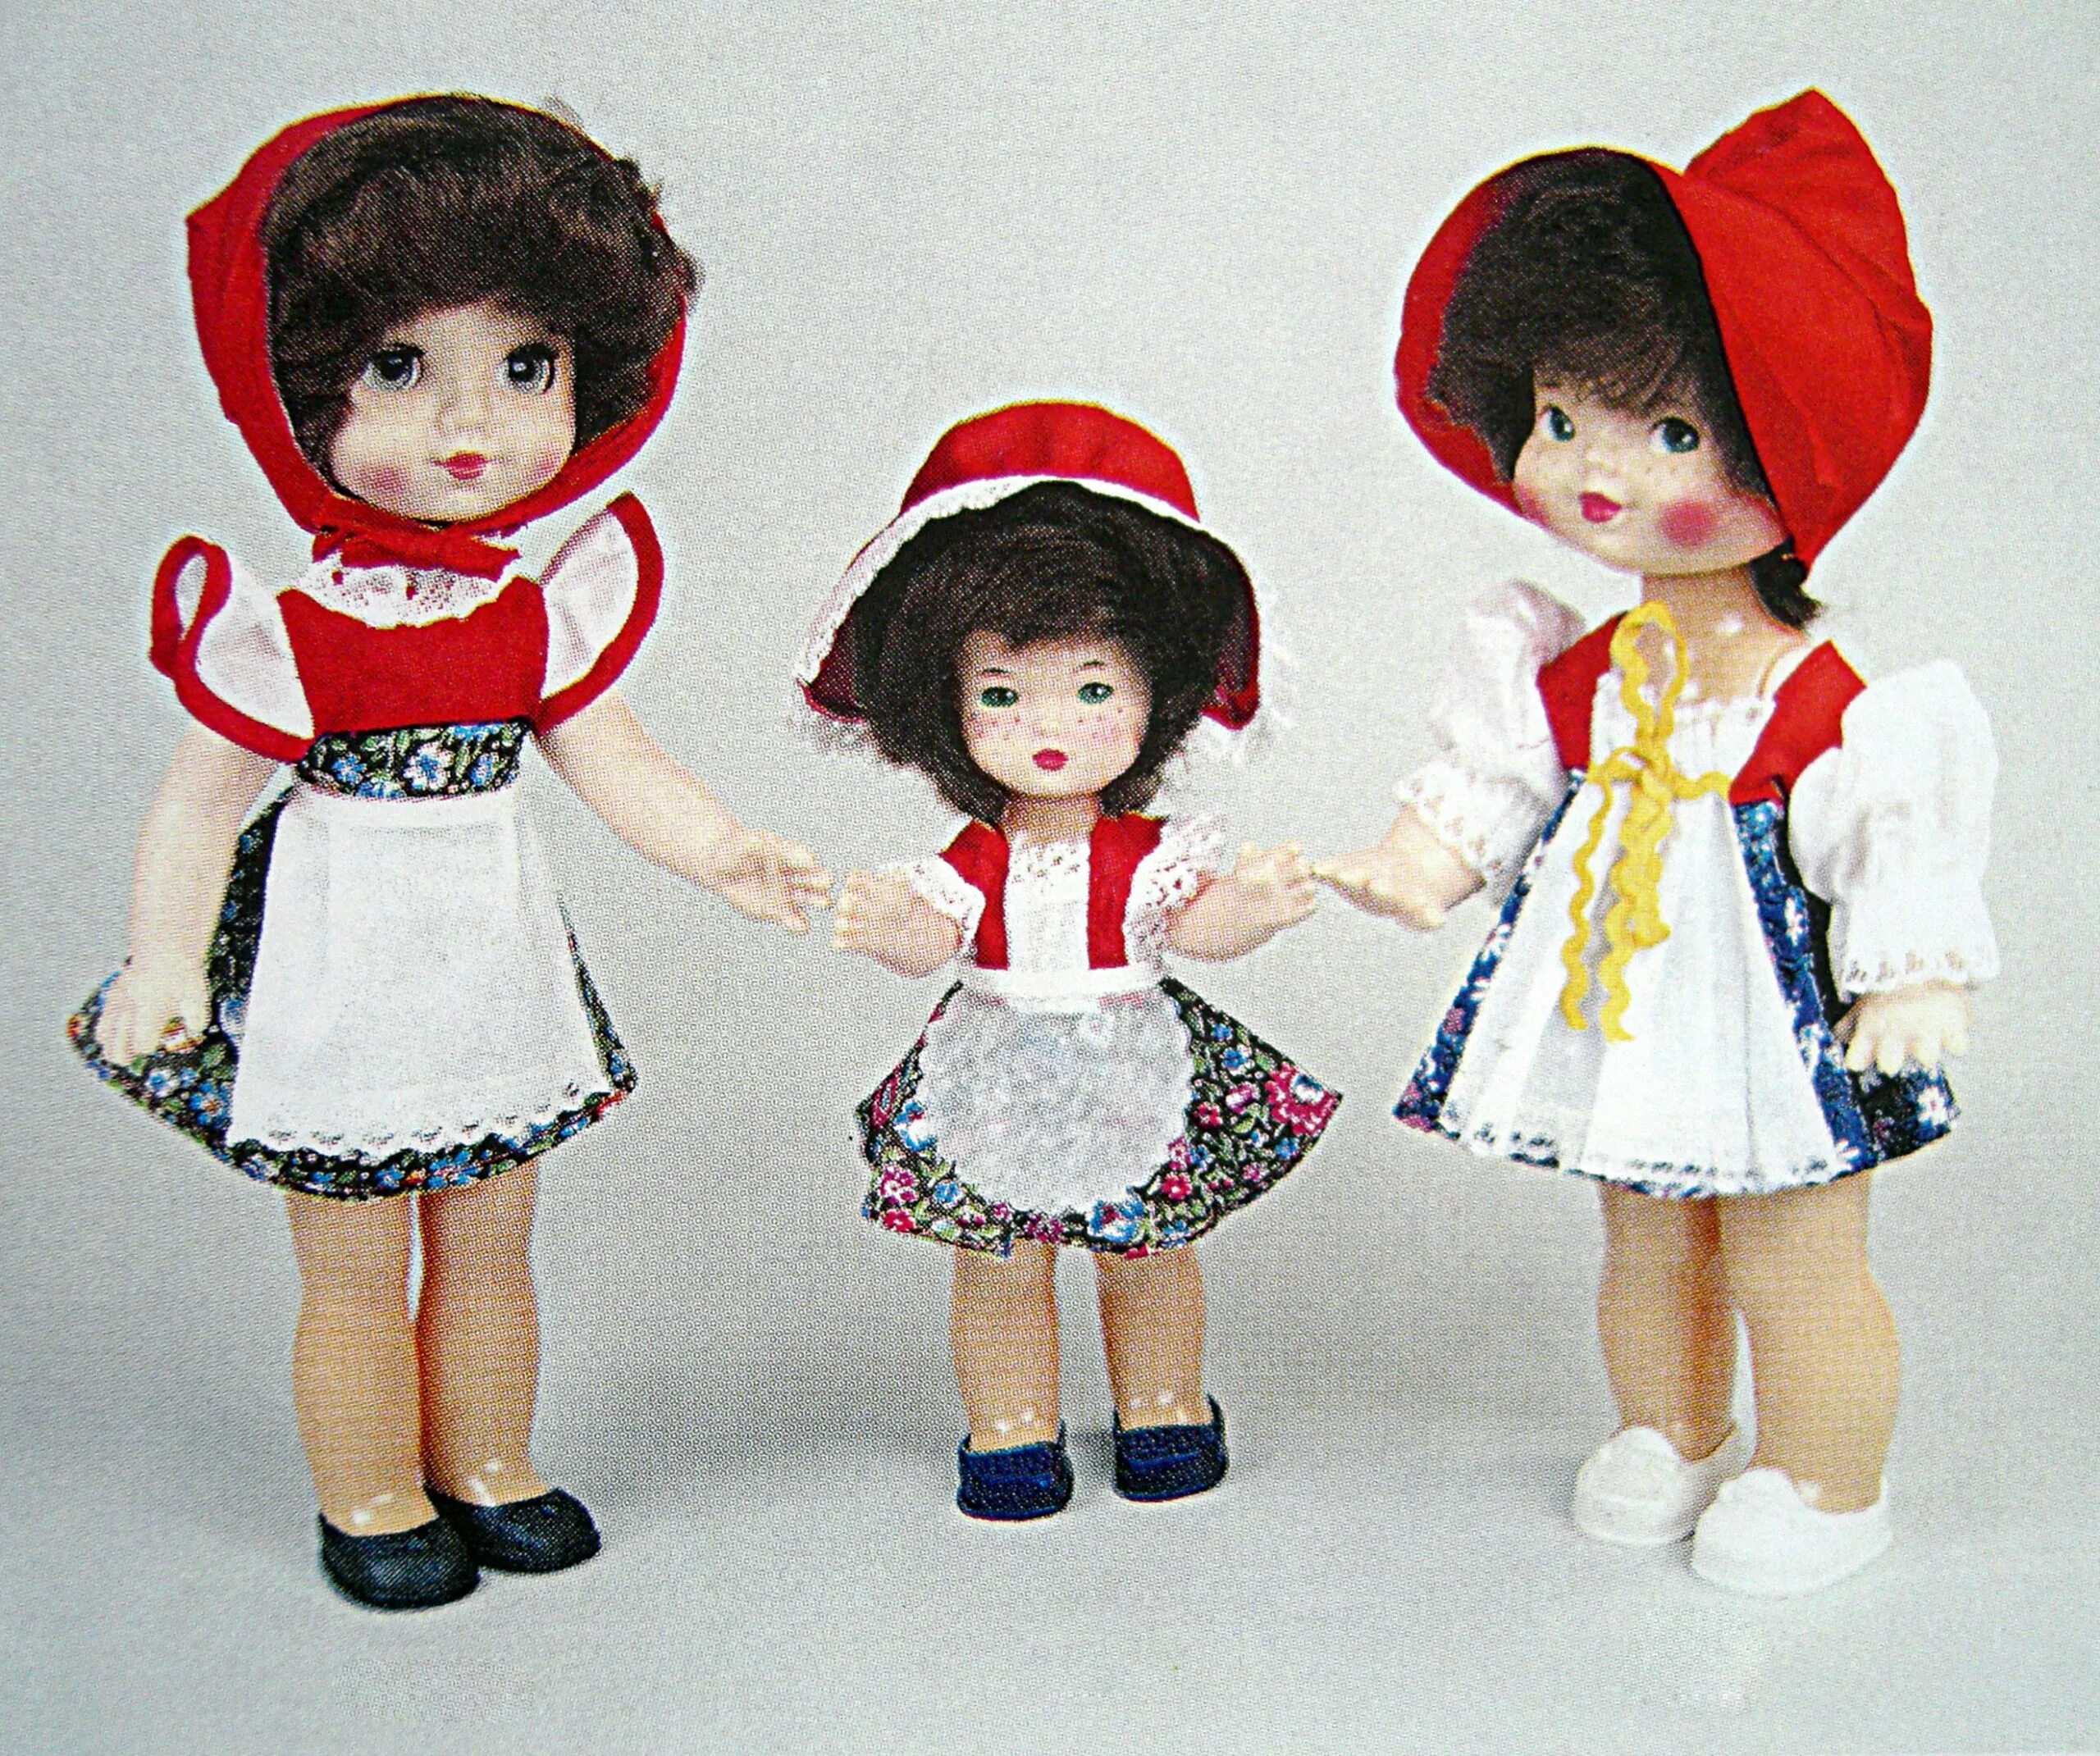 Красные куколки. Куклы красная шапочка фабрика Ленигрушка. Кругозор красная шапочка кукла. Куклы фабрики кругозор. Советская кукла красная шапочка.